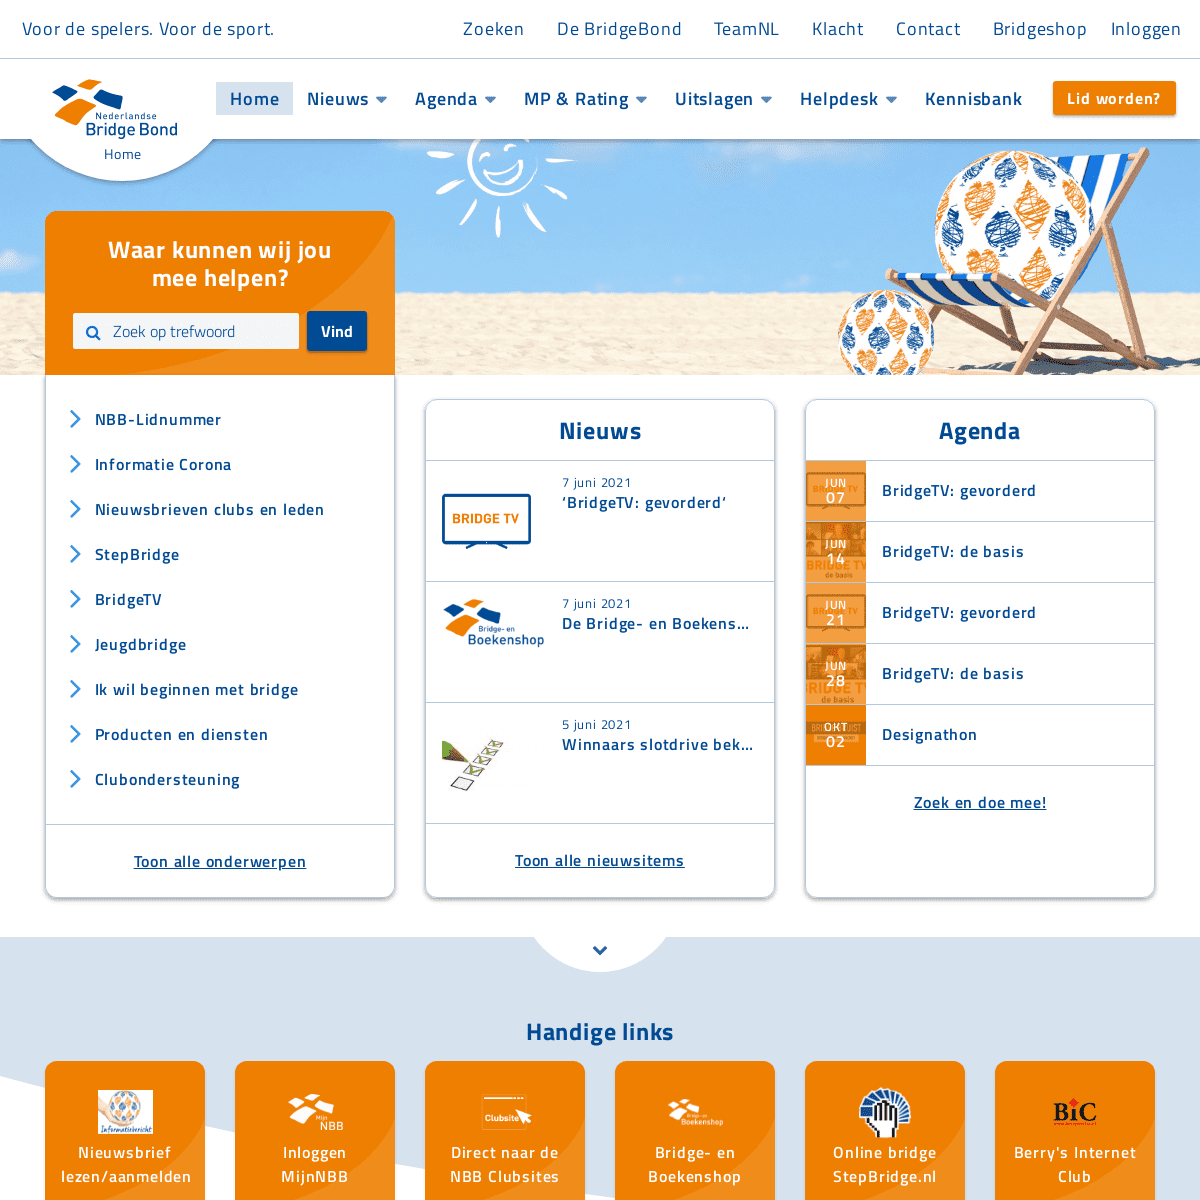 A complete backup of https://bridge.nl